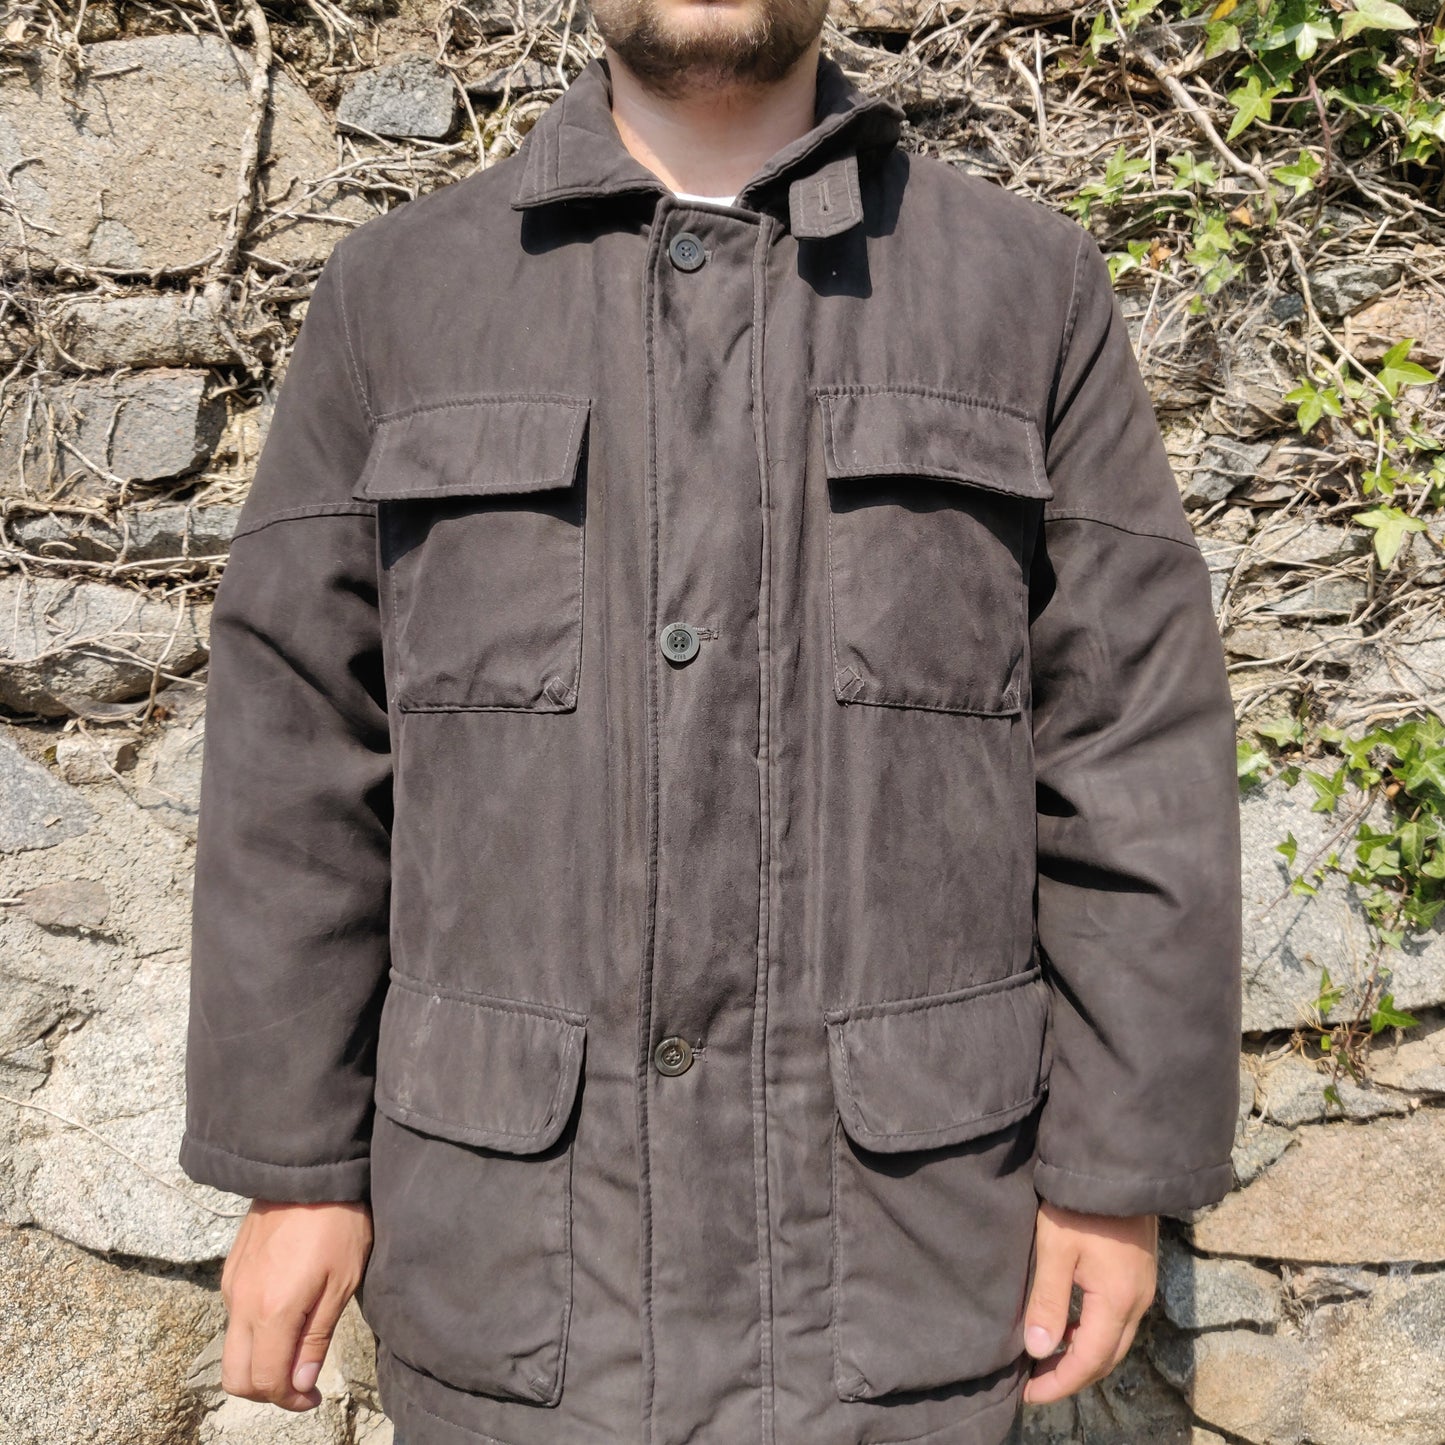 Bush Vintage Brown Outdoor Padded Insulated Utility Overcoat Coat Jacket Men XL